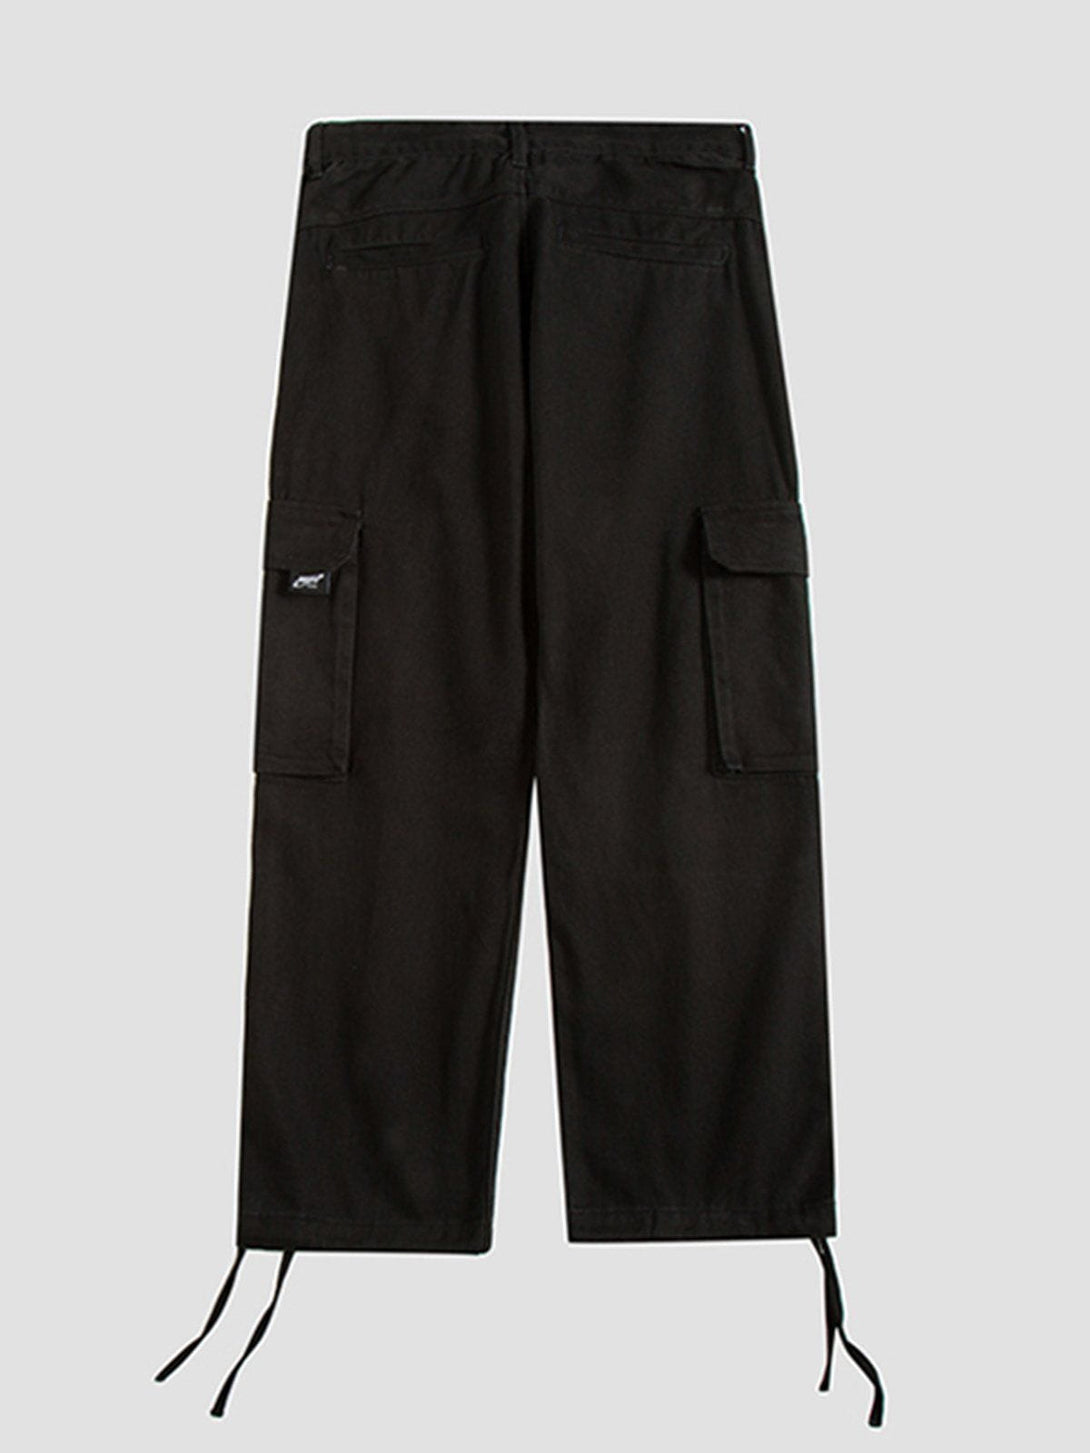 Majesda® - Tuckable Leg Cargo Pants outfit ideas streetwear fashion